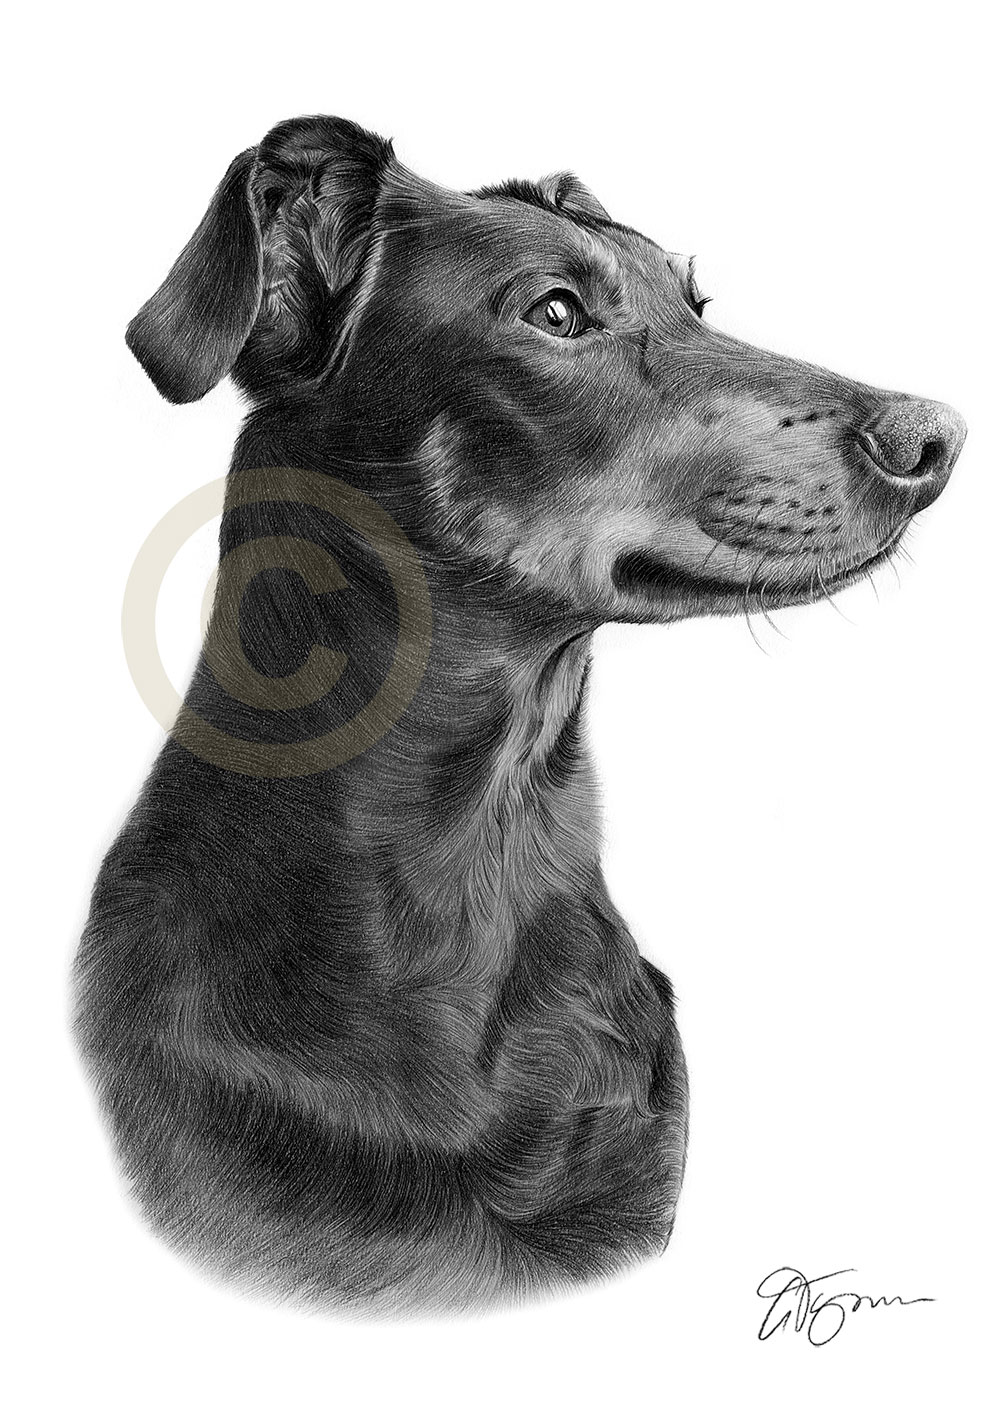 Pet portrait commission of a doberman pinscher by artist Gary Tymon